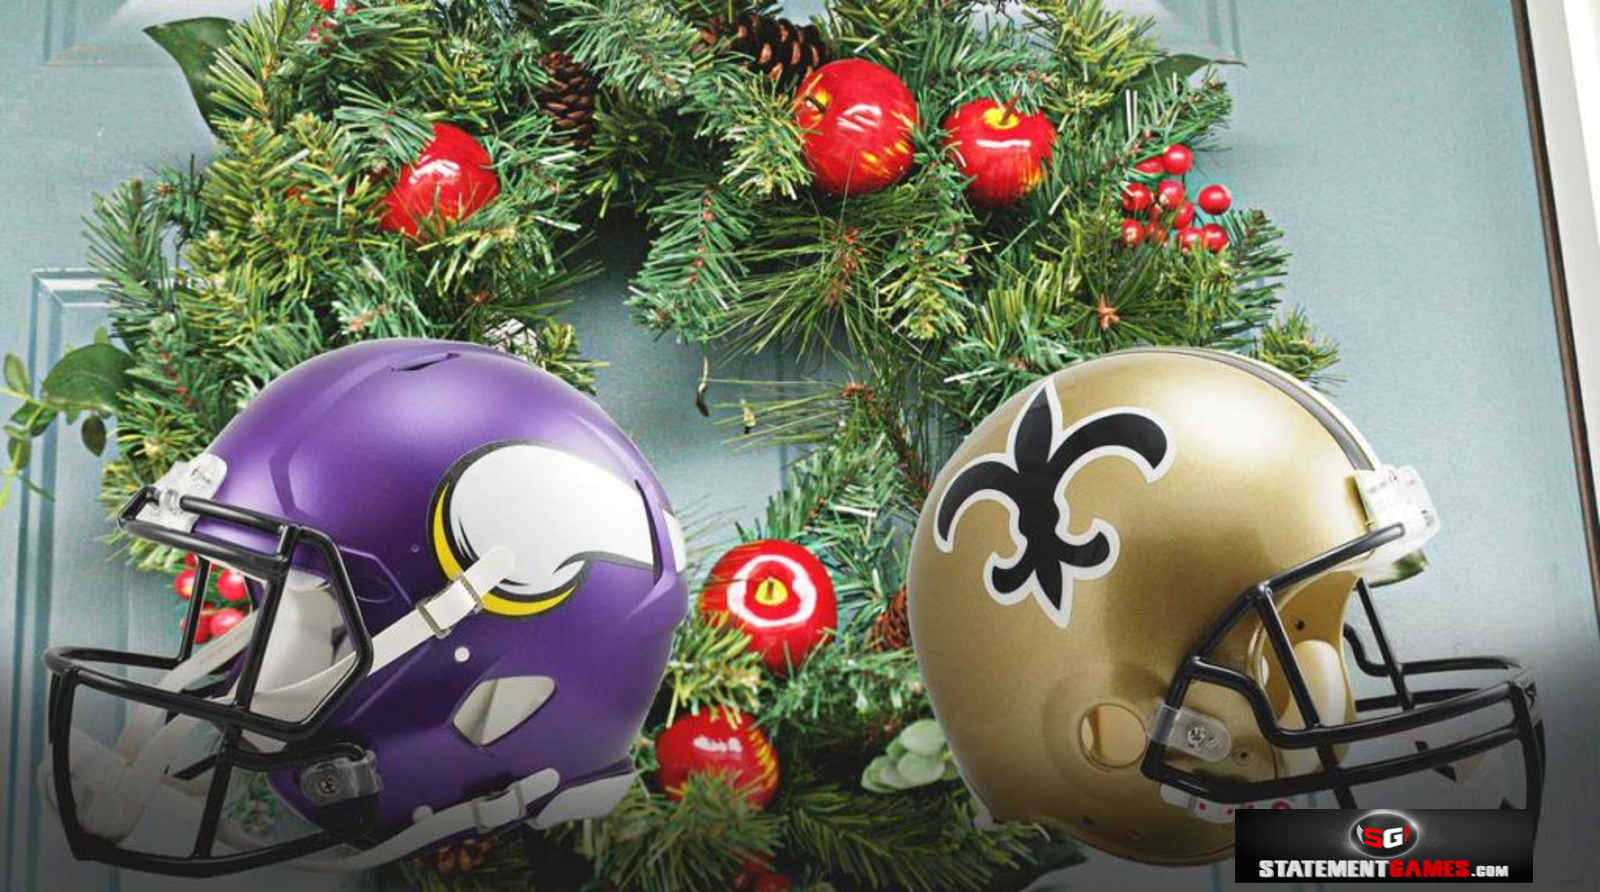 Minnesota Vikings Vs New Orleans Saints-Game Day Preview: 12.25.2020